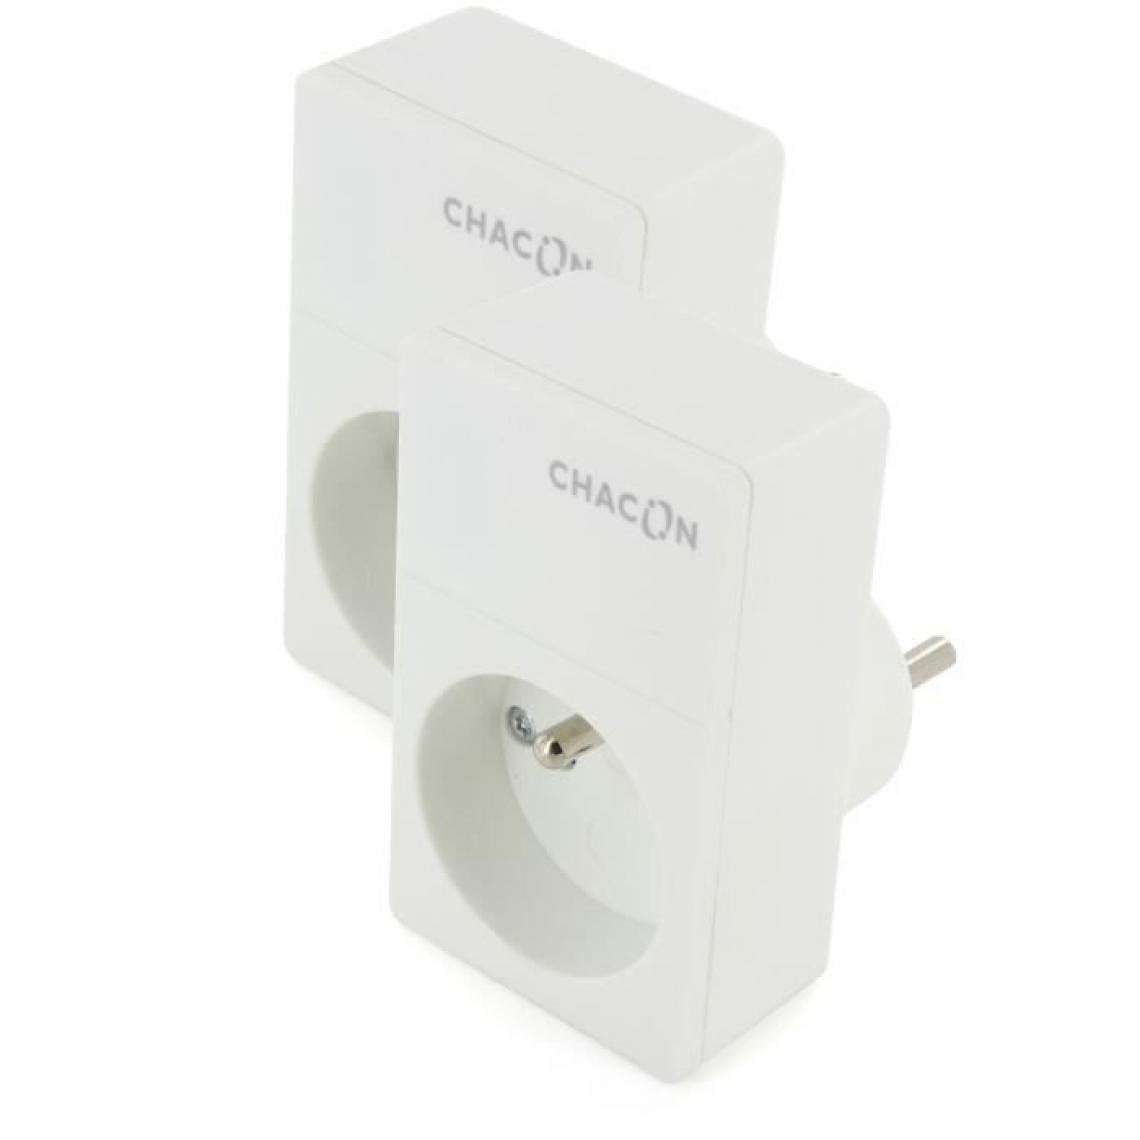 Chacon - Kit Duo Prises Wi-Fi CHACON 2 Prises Wifi Chacon - Fiches électriques